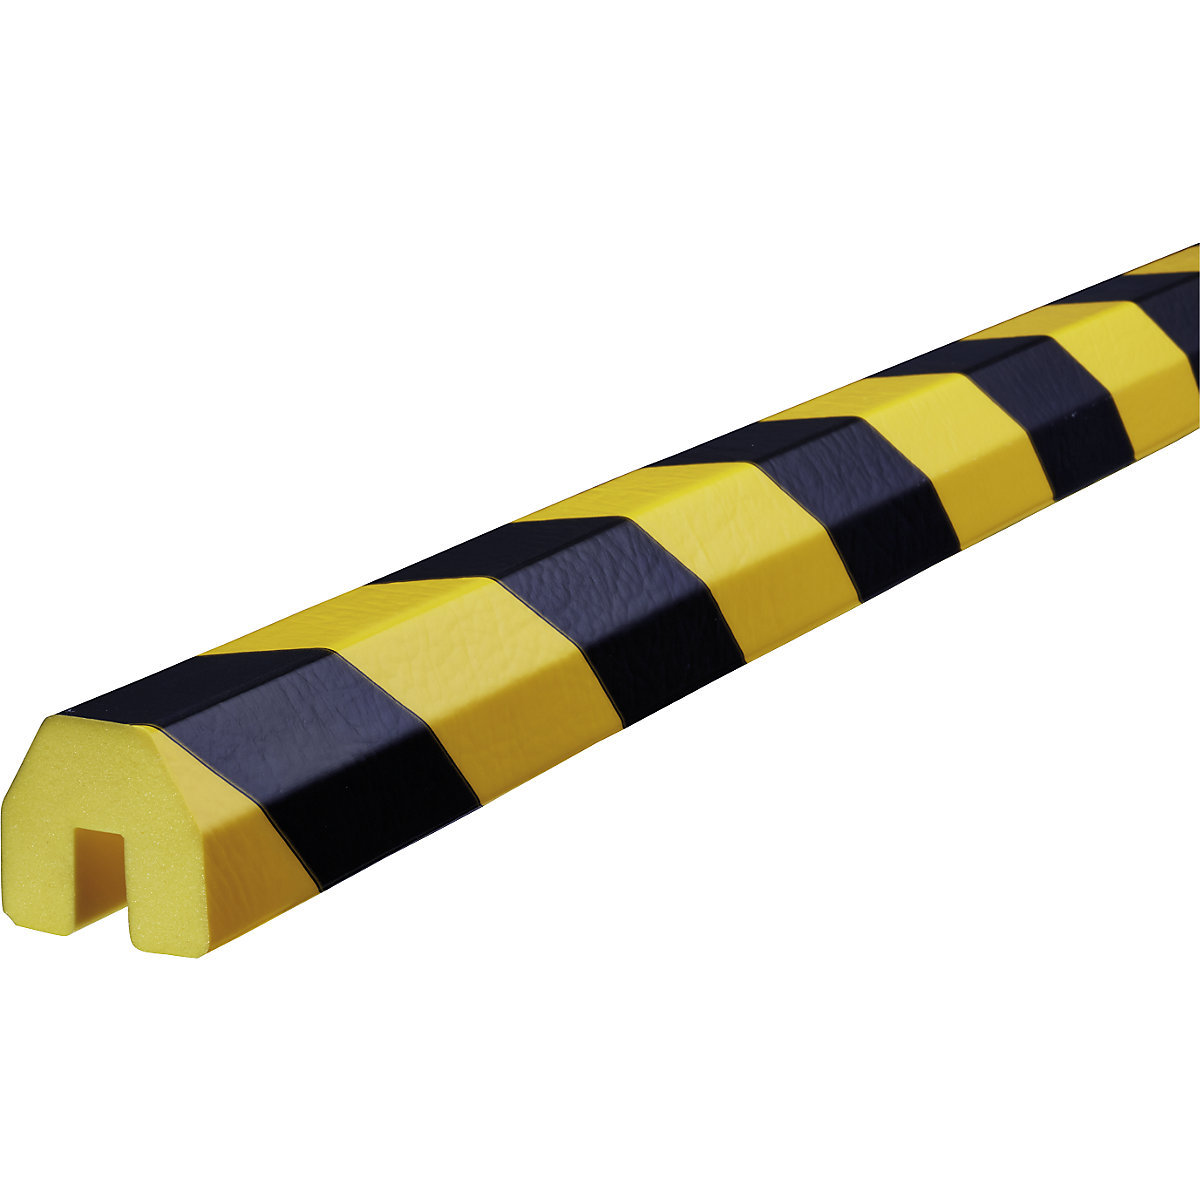 Knuffi® edge protection – SHG, type BB, 1 x 5 m roll, black / yellow-20